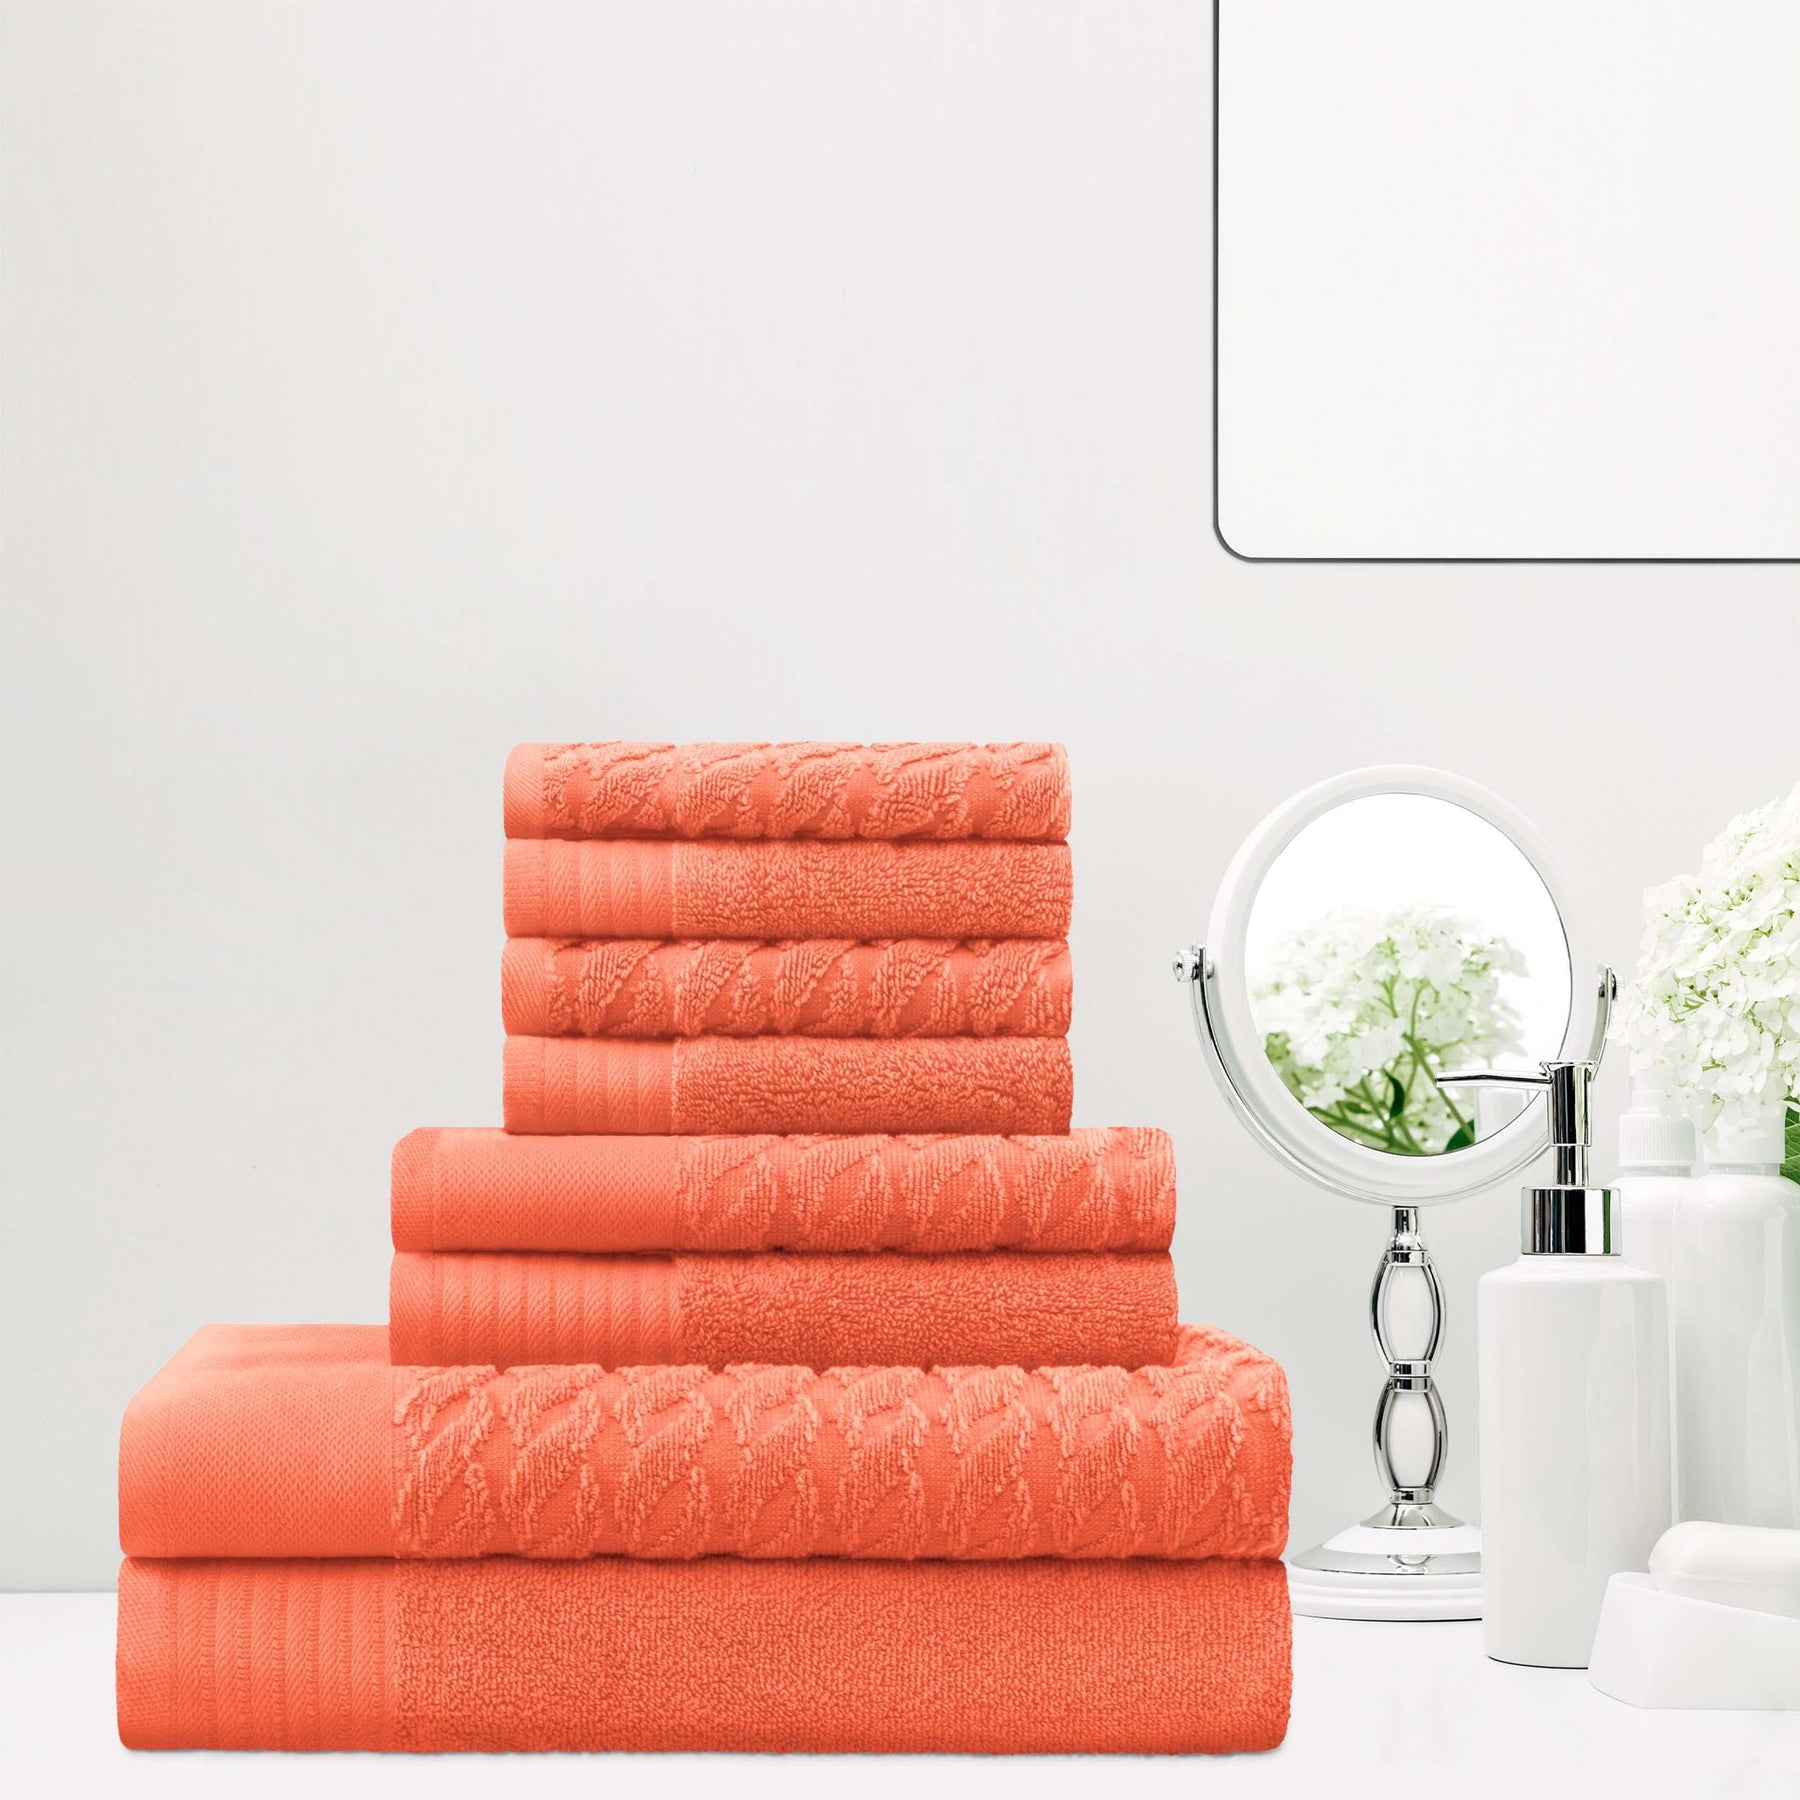 Premium Turkish Cotton Jacquard Herringbone and Solid 8-Piece Towel Set - Emberglow